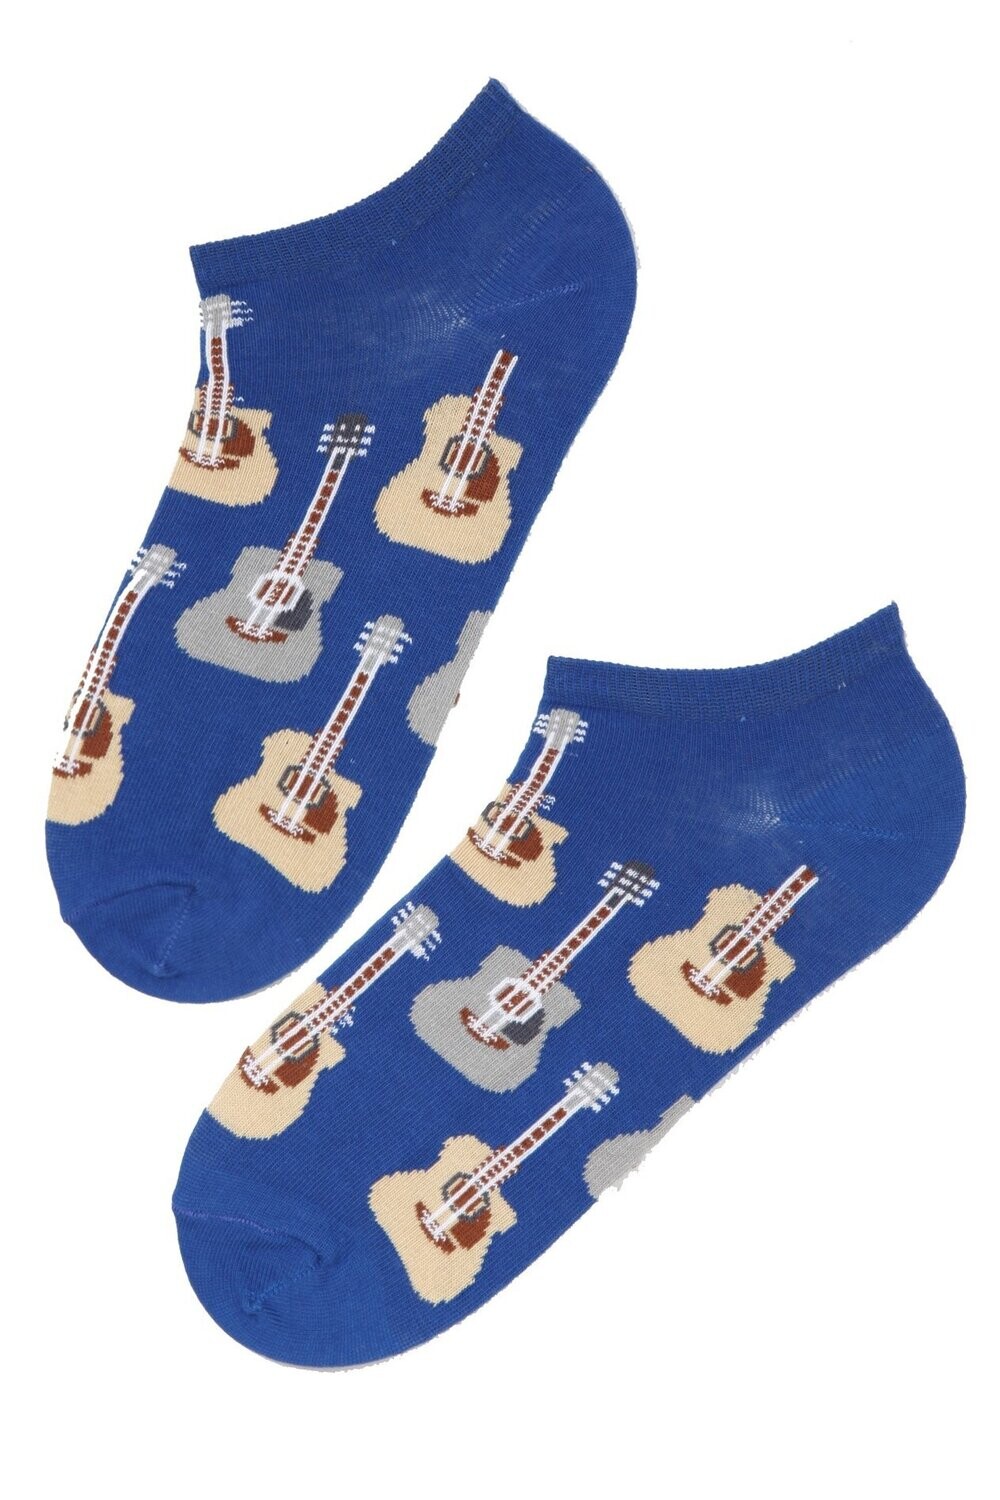 PUREJOY men's low-cut blue guitar socks